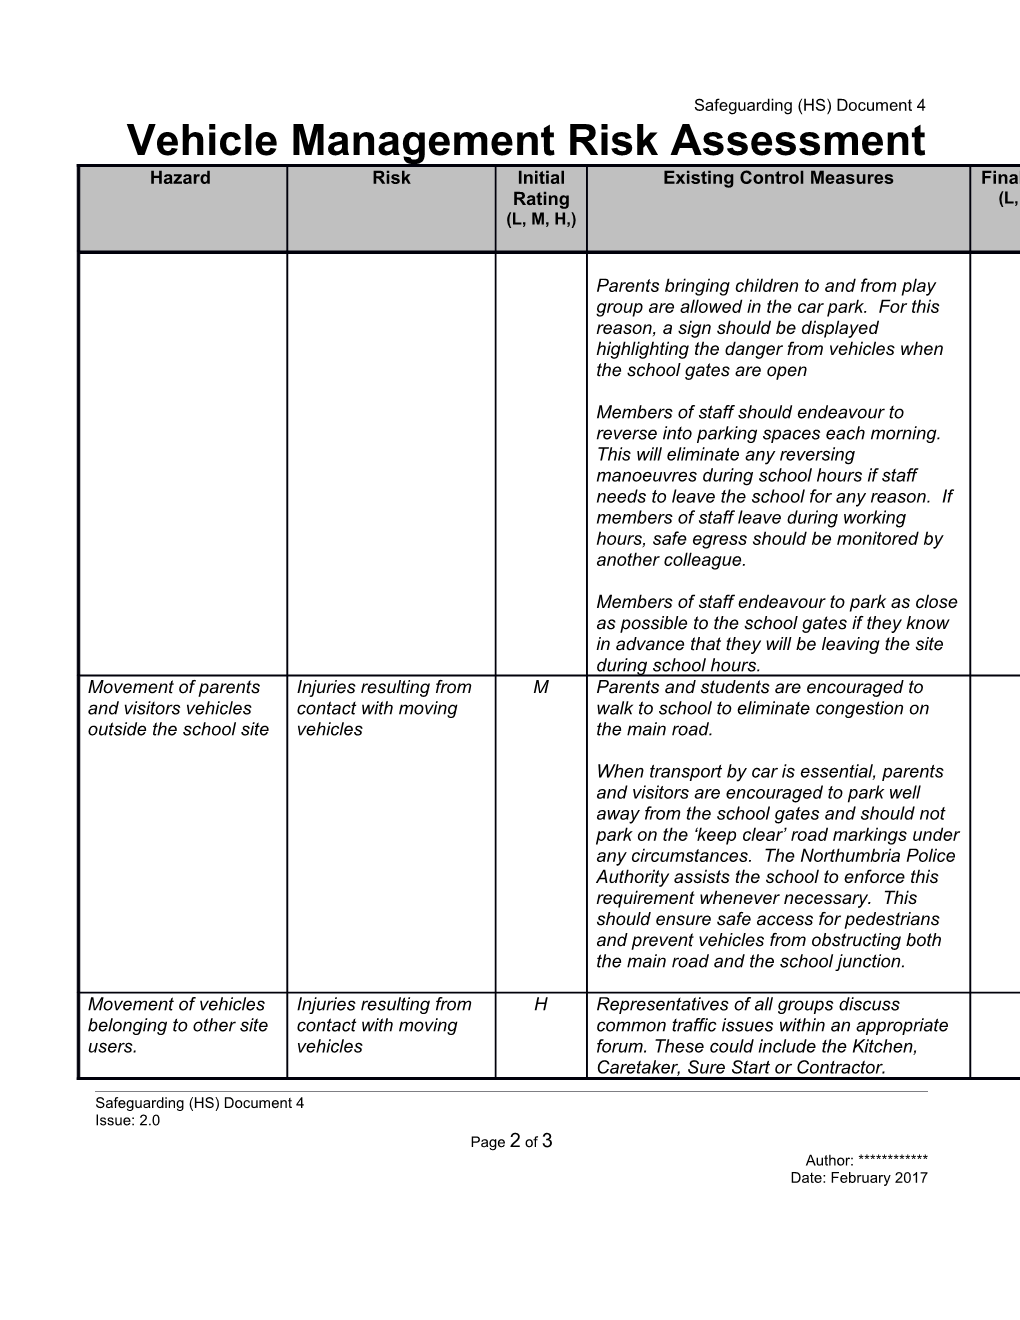 Document 4 - Vehicle Management Risk Assessment